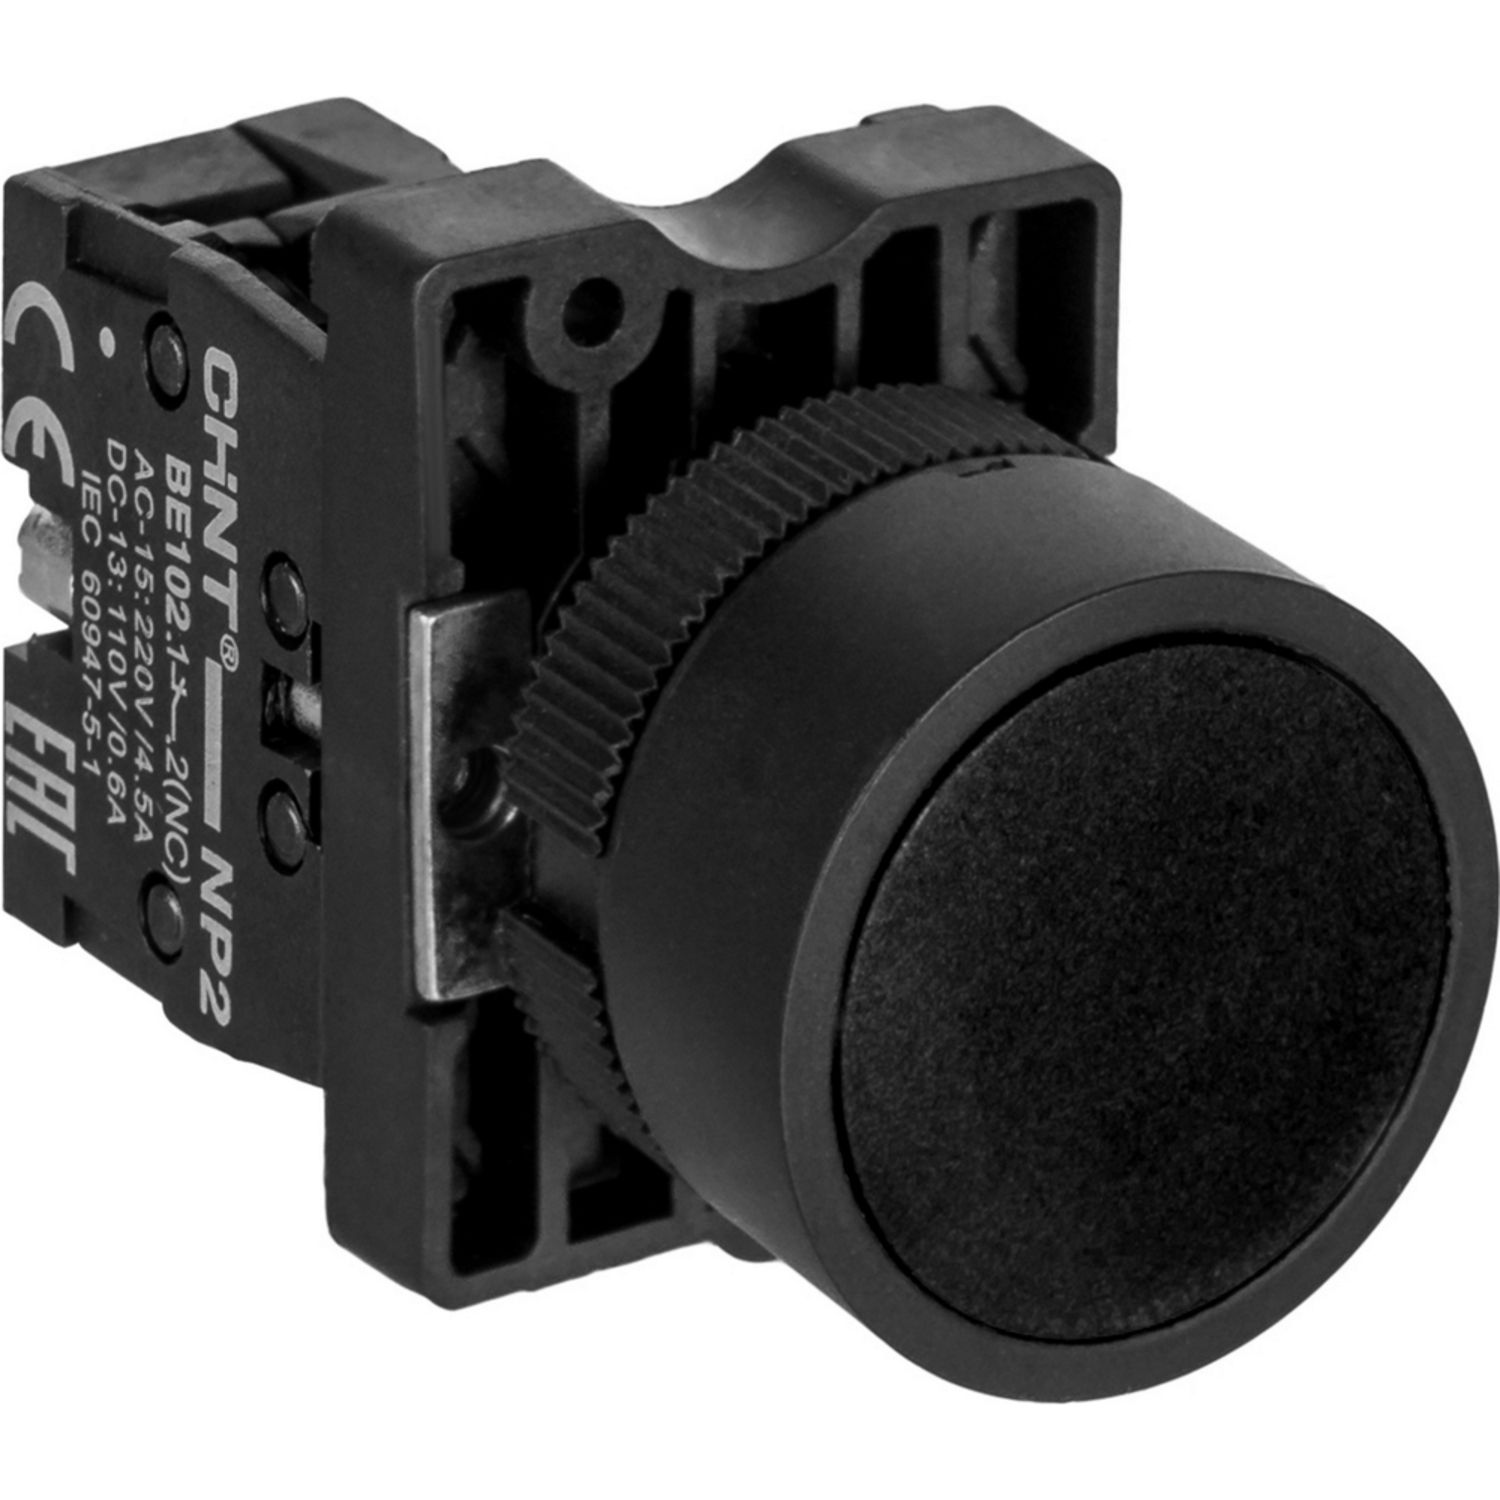 Кнопка управления NP2-EA21 без подсветки черная 1НО IP40